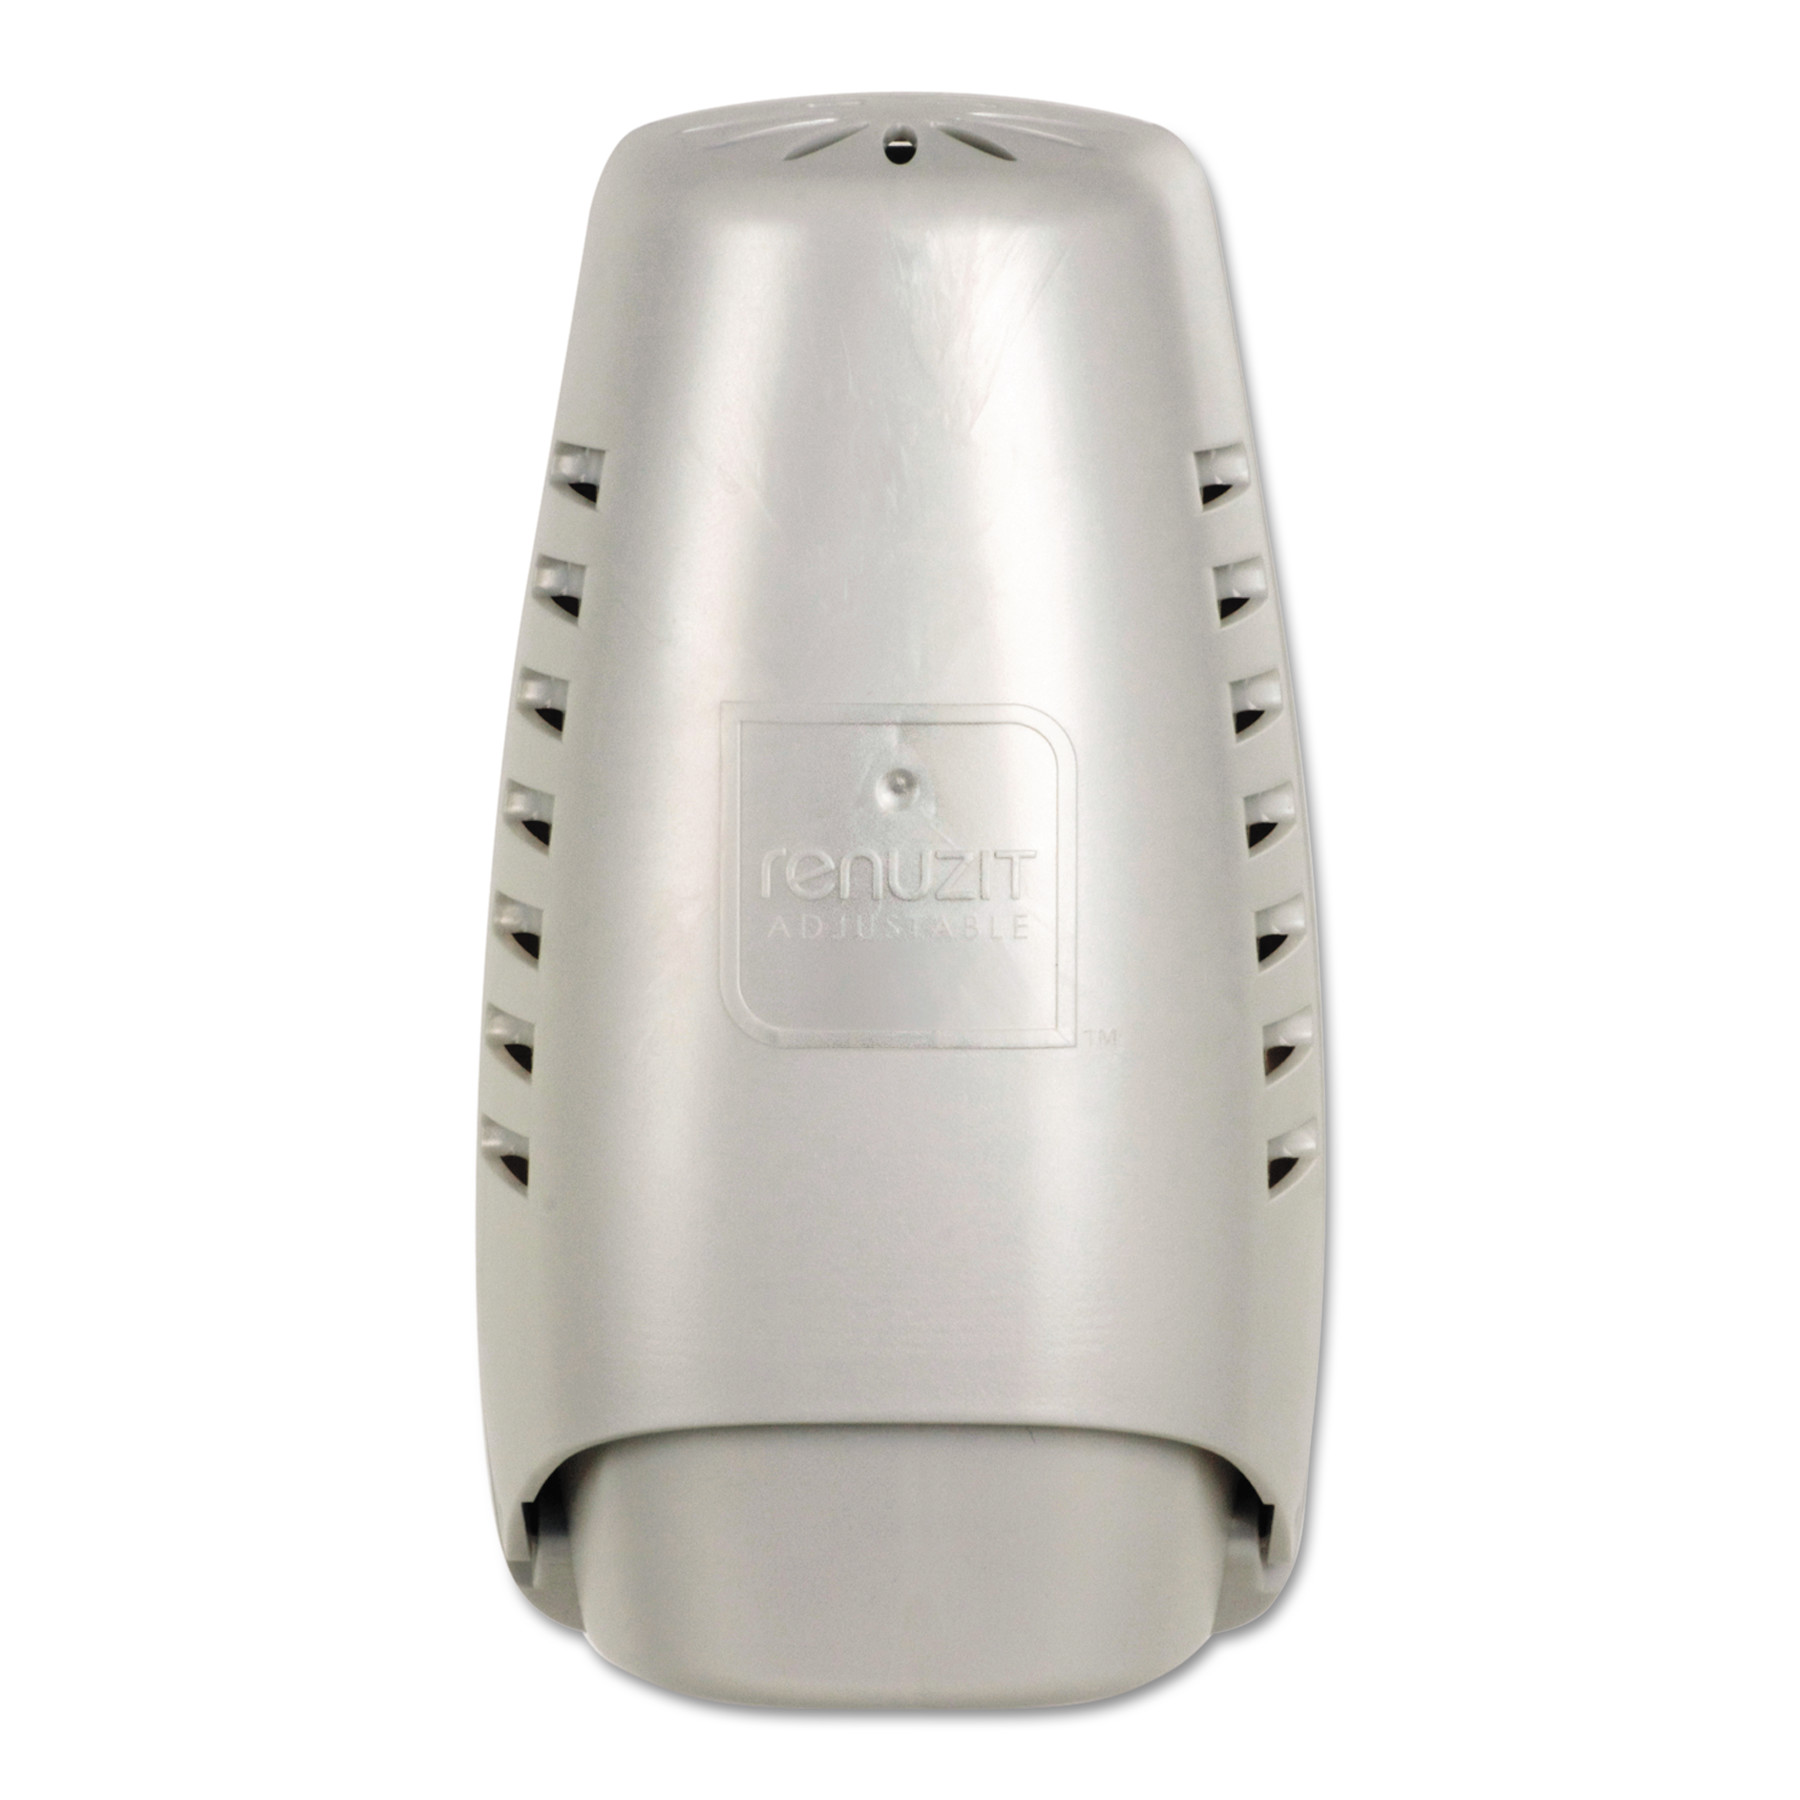 Renuzit Wall Mount Air Freshener Dispenser, 3-3/4" x 3-1/4" x 7-1/4", Silver, 6 Per Carton - image 1 of 3